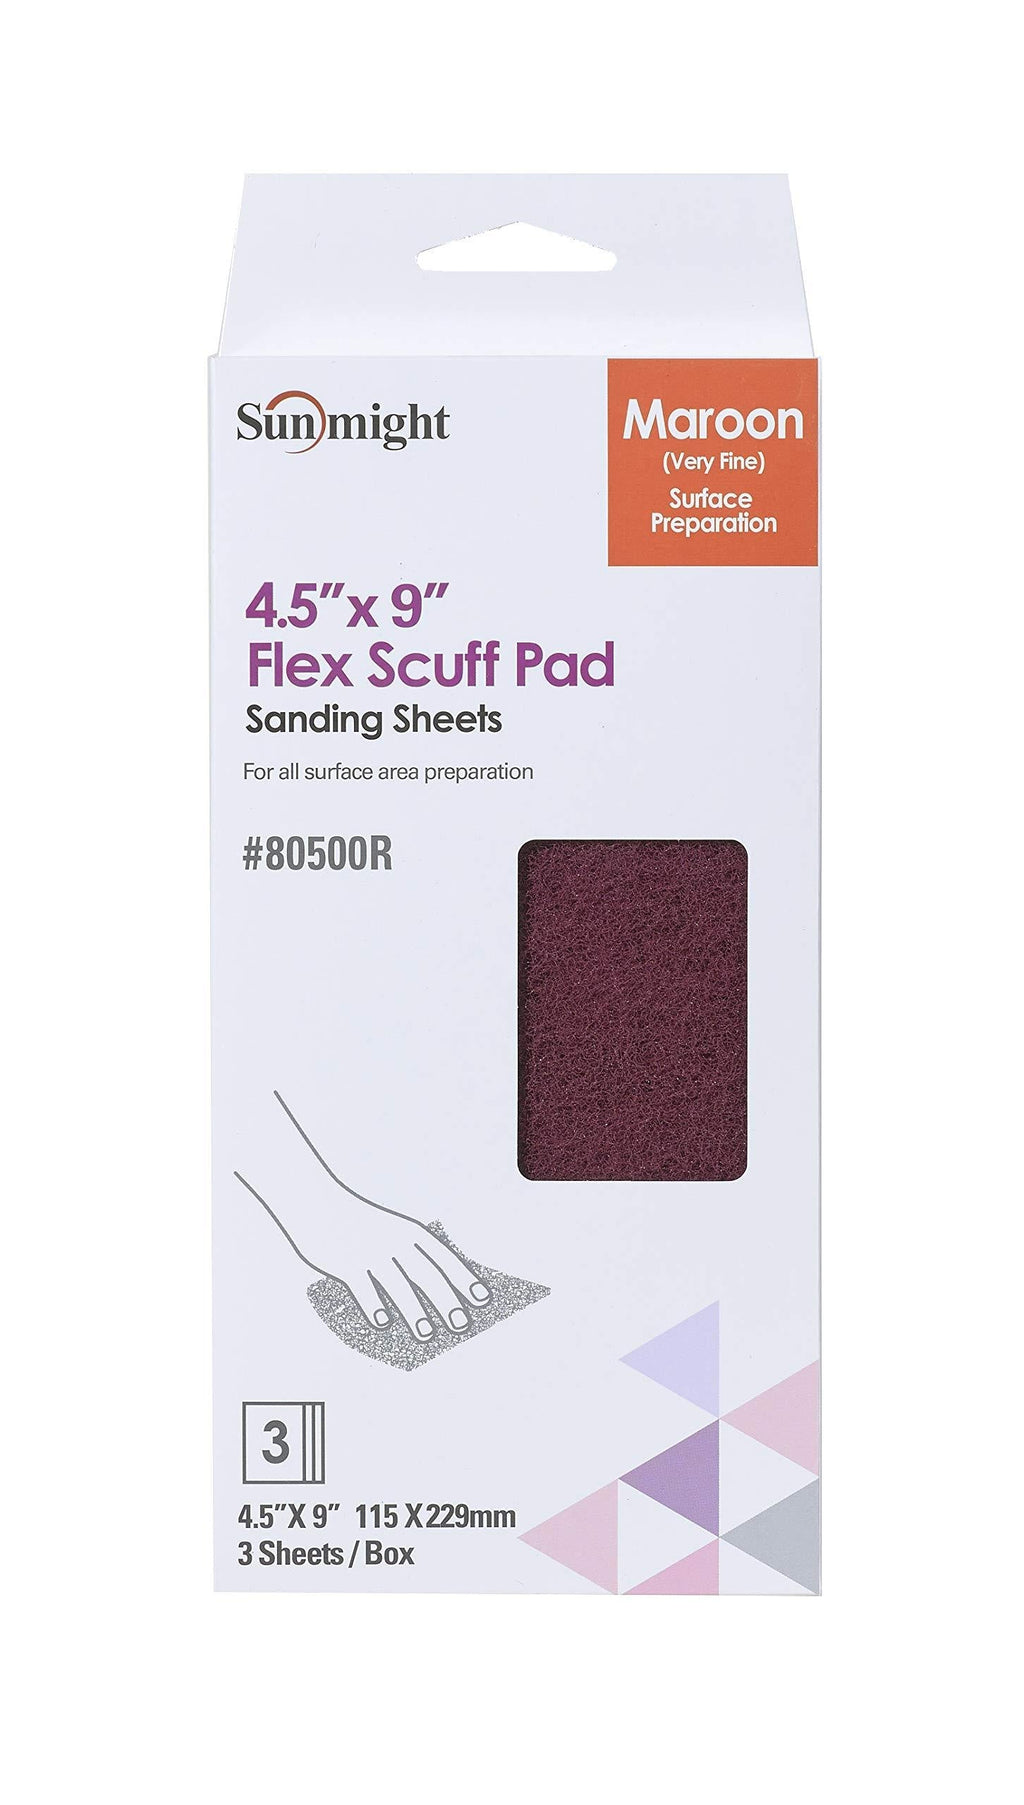  [AUSTRALIA] - Sunmight 4.5" X 9" Flex Scuff Pads Grit Maroon Retail Pack